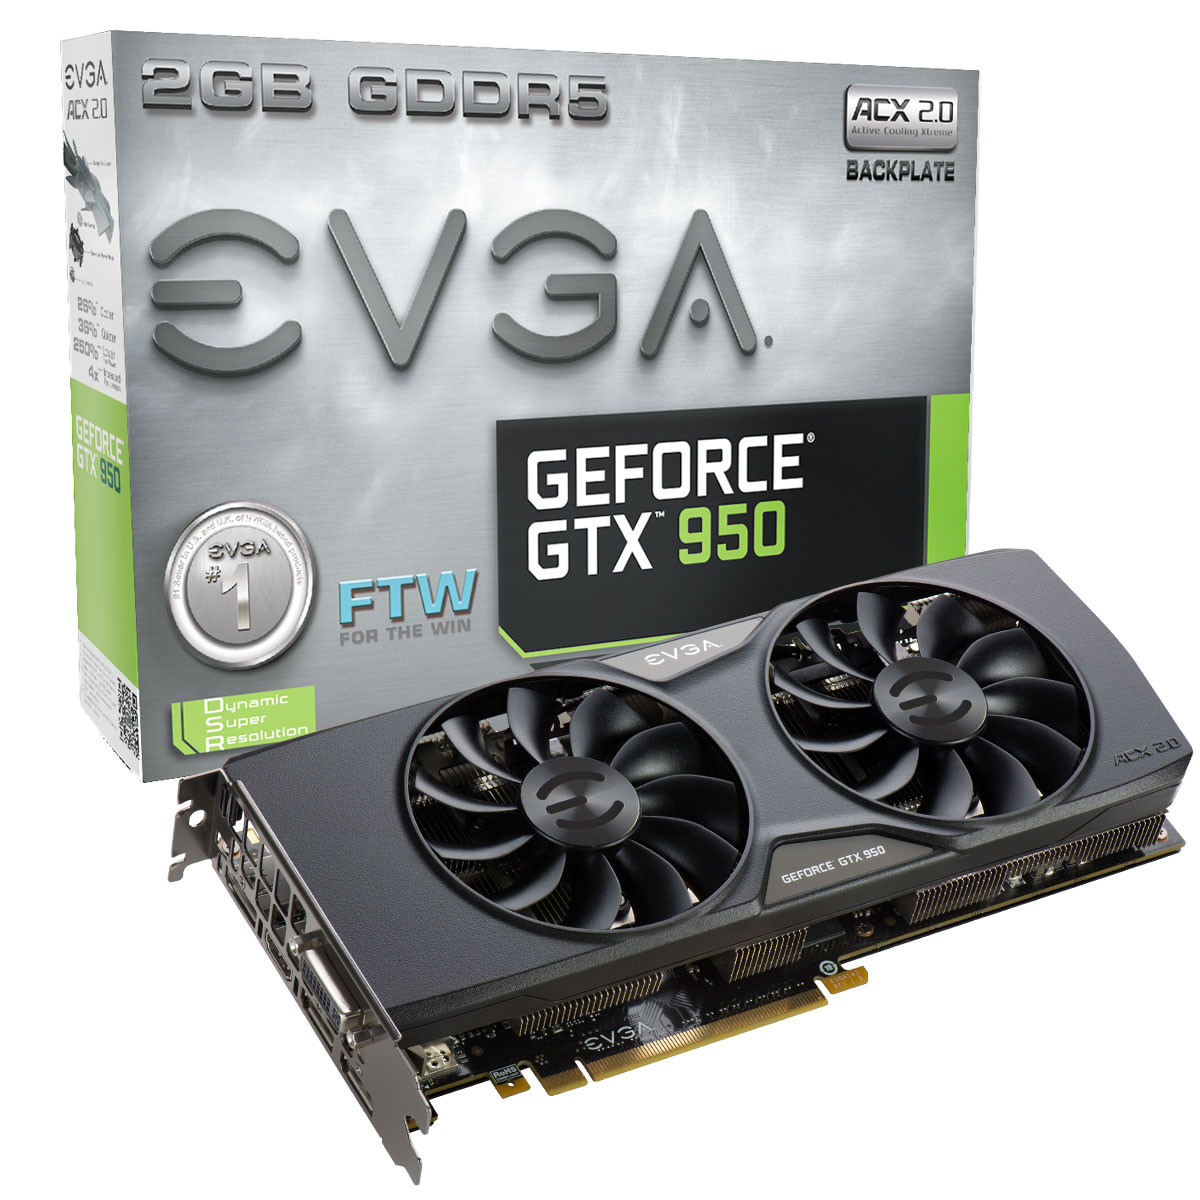 EVGA Announces the GeForce GTX 950 ACX 2.0 Series | TechPowerUp